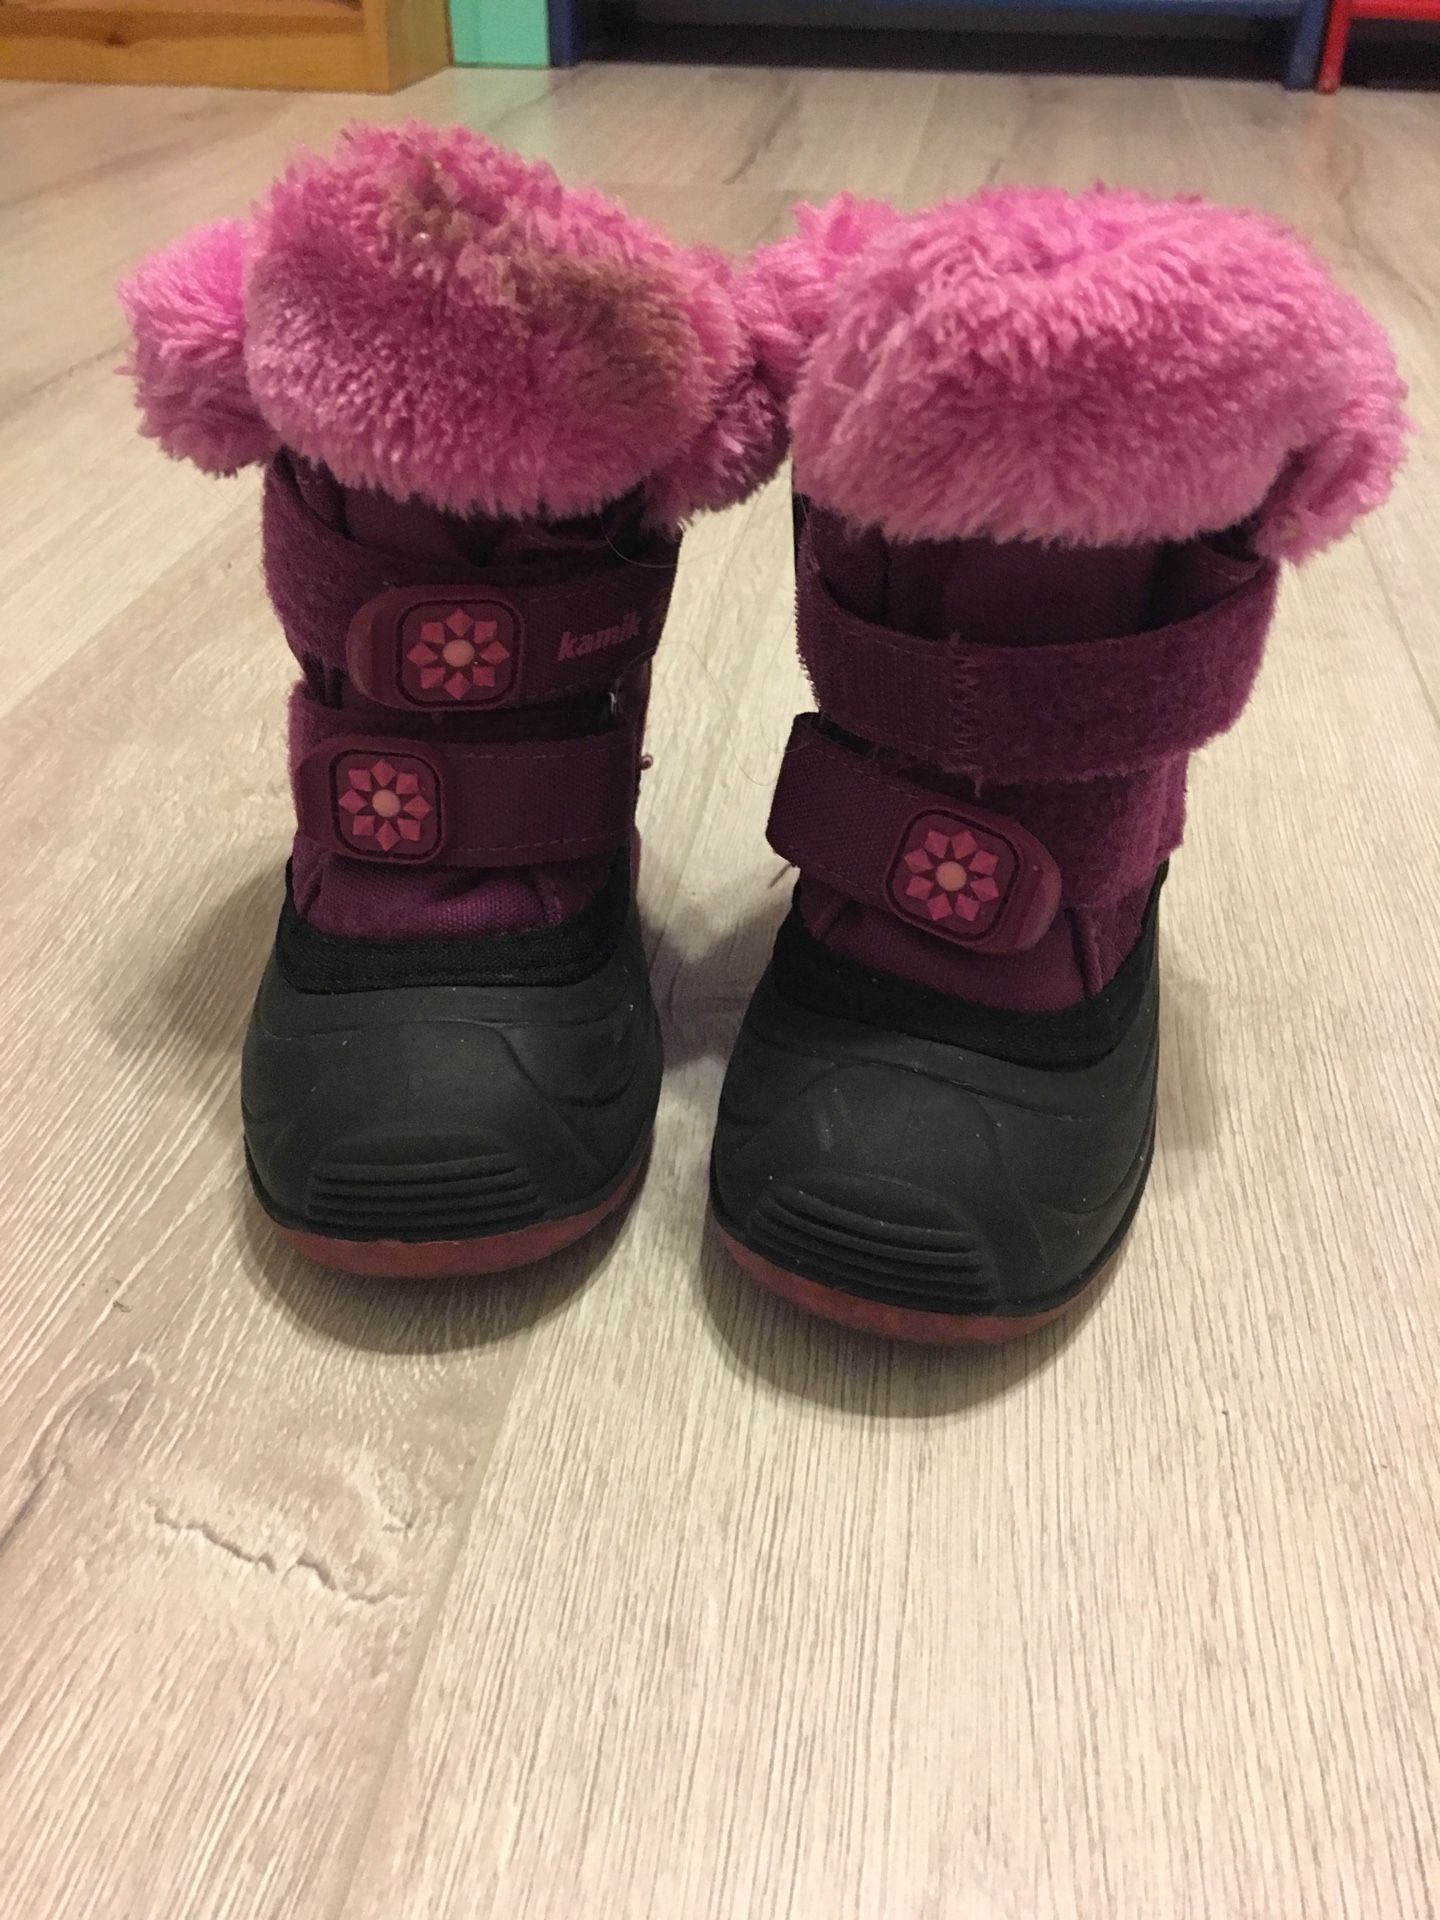 Kamik size 7 (toddler) snow boots